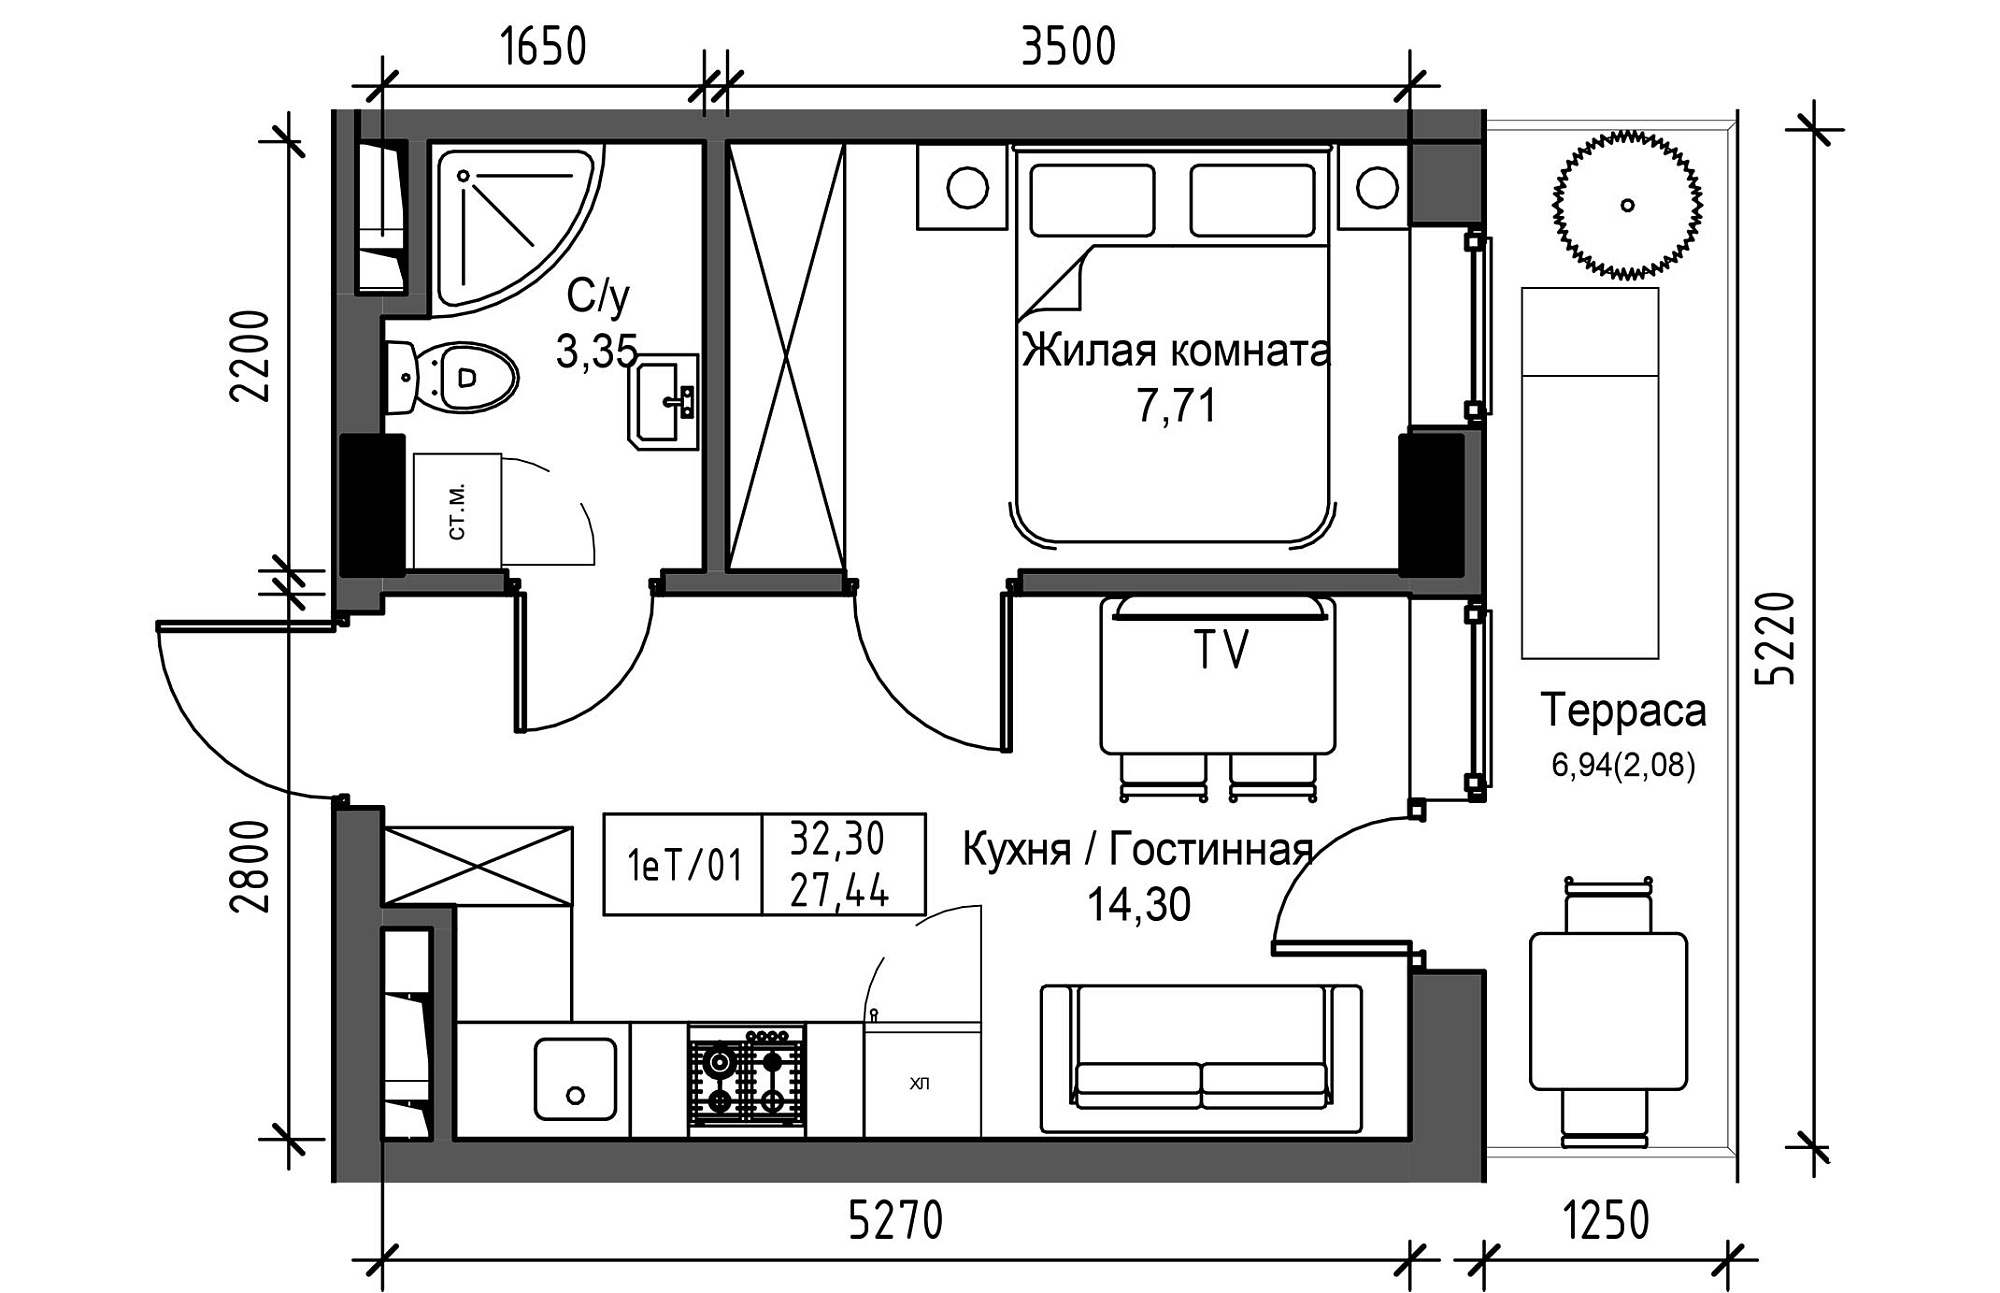 Planning 1-rm flats area 27.44m2, UM-003-05/0036.